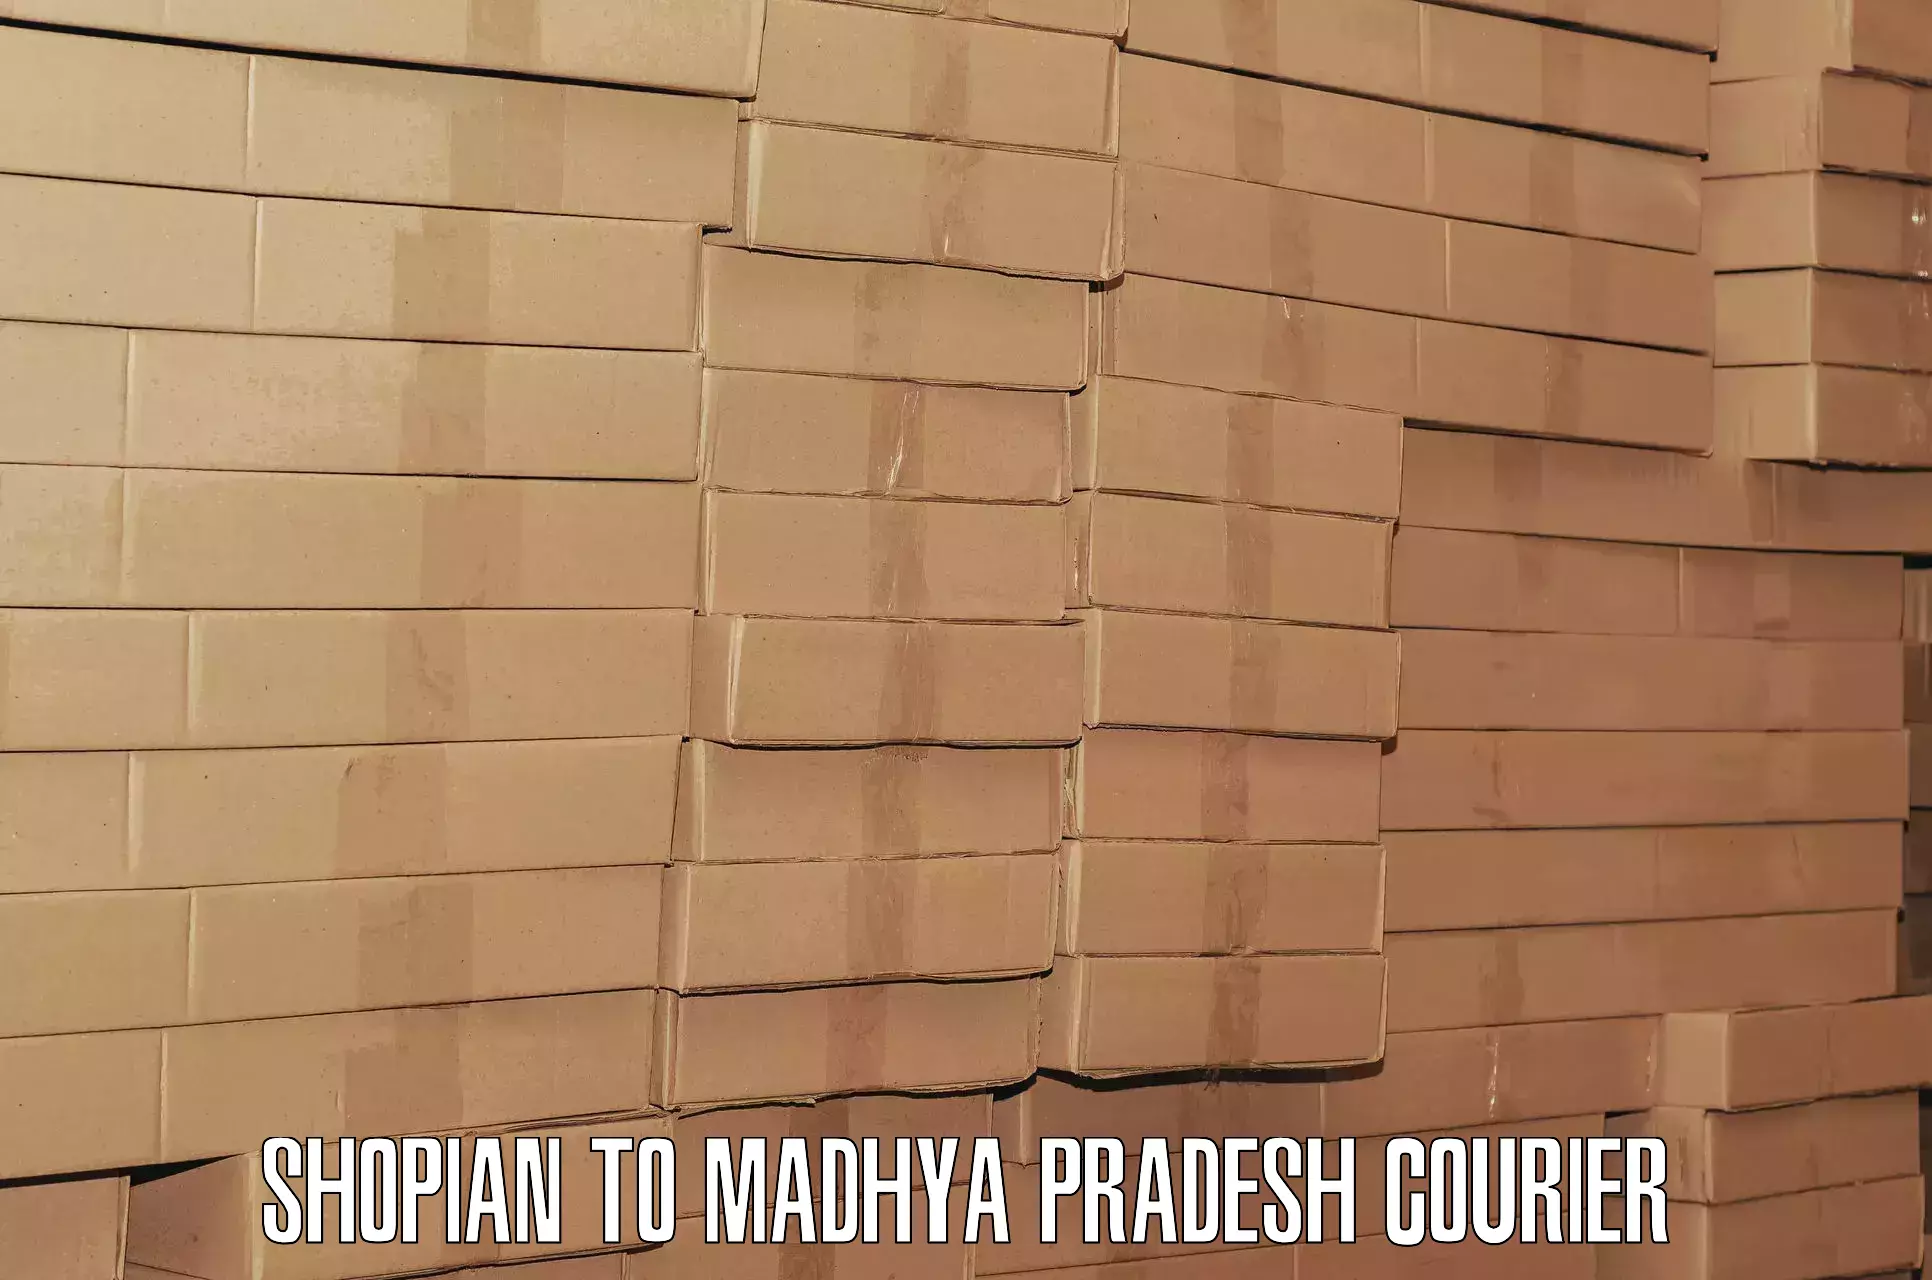 Luggage transport company Shopian to Madhya Pradesh